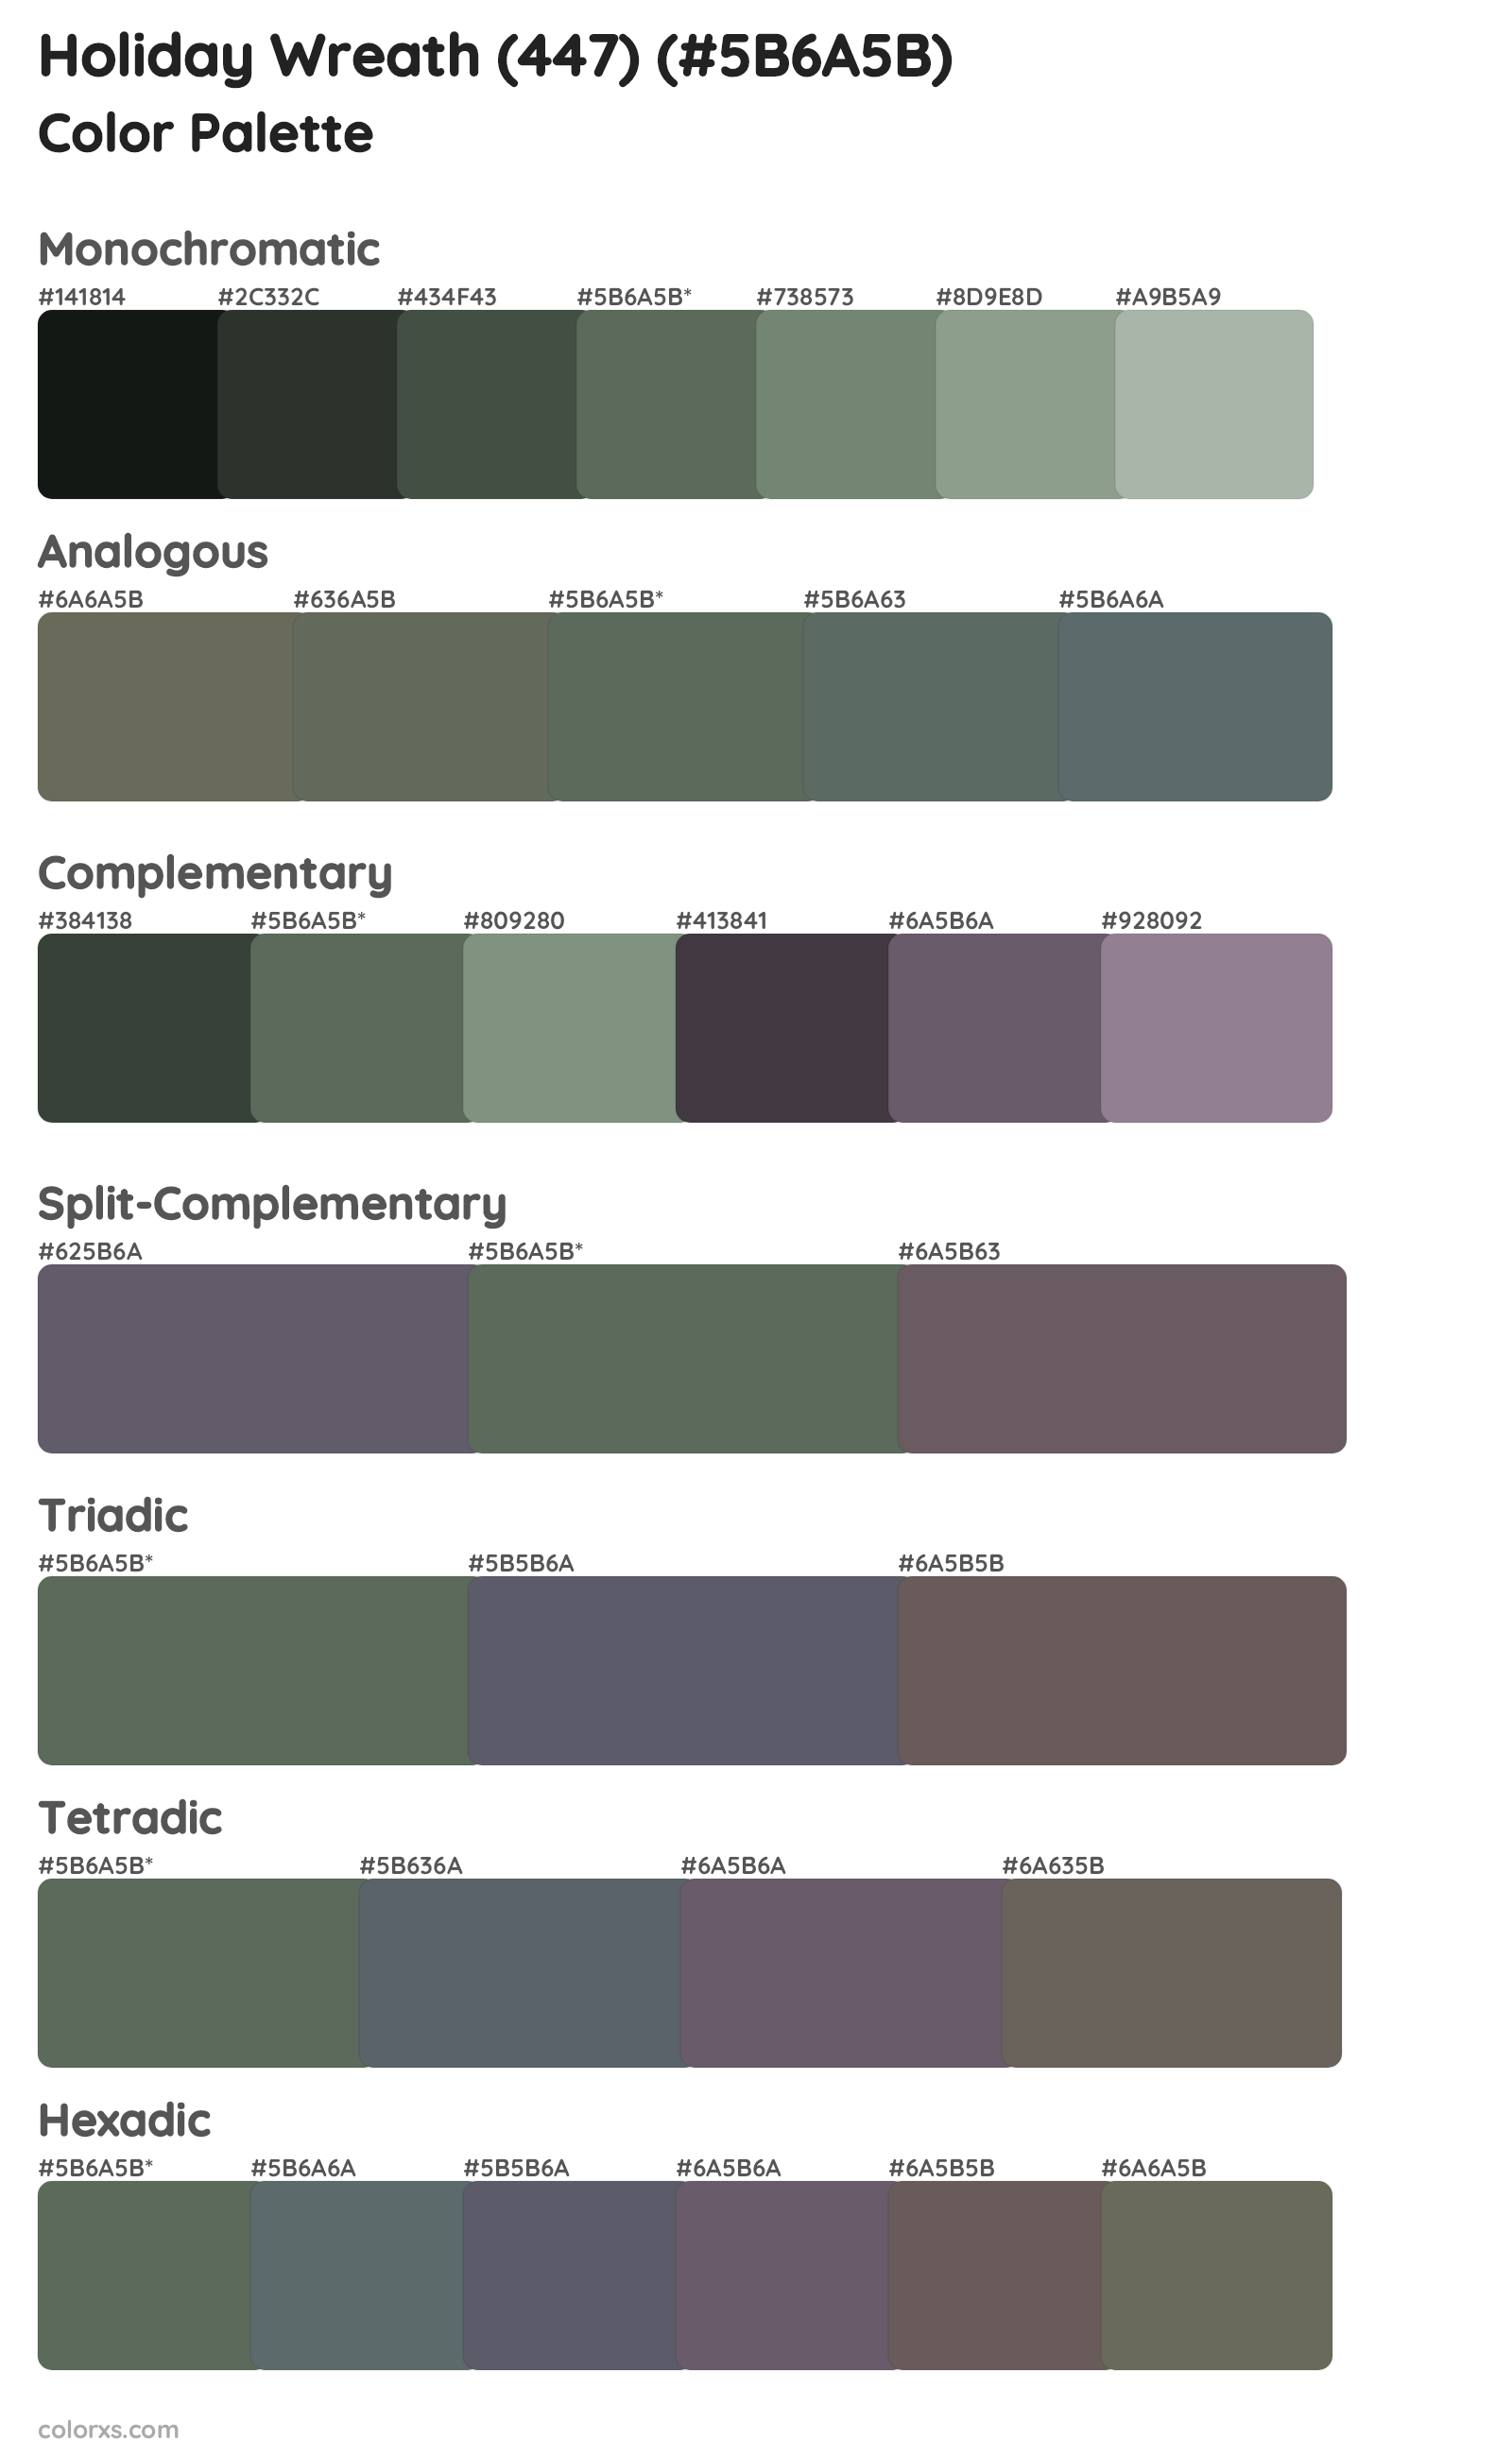 Holiday Wreath (447) Color Scheme Palettes